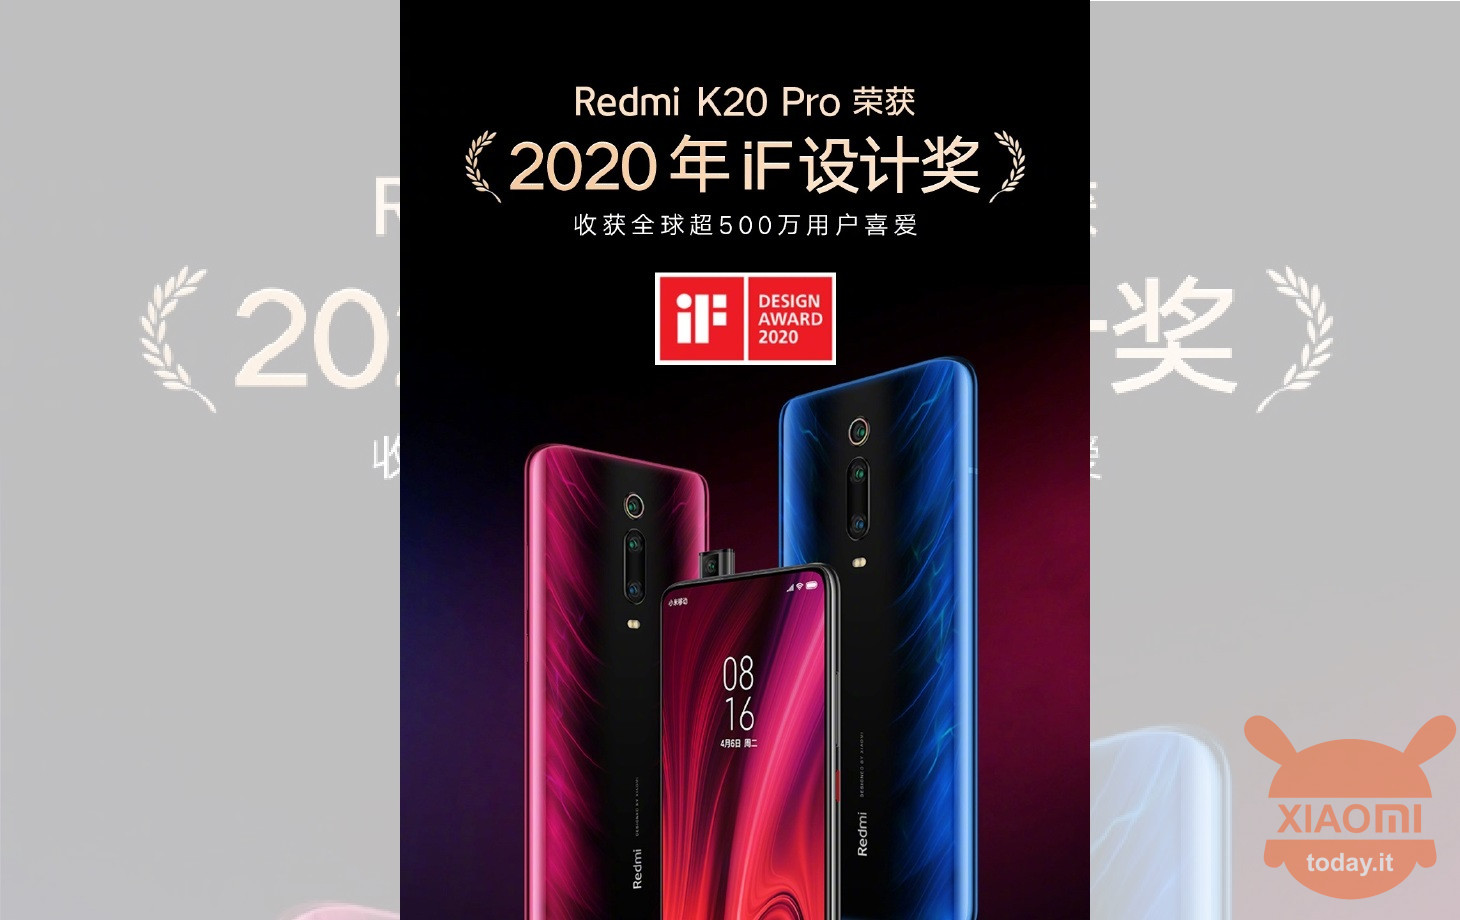 Redmi K20 Pro iF Design Award 2020